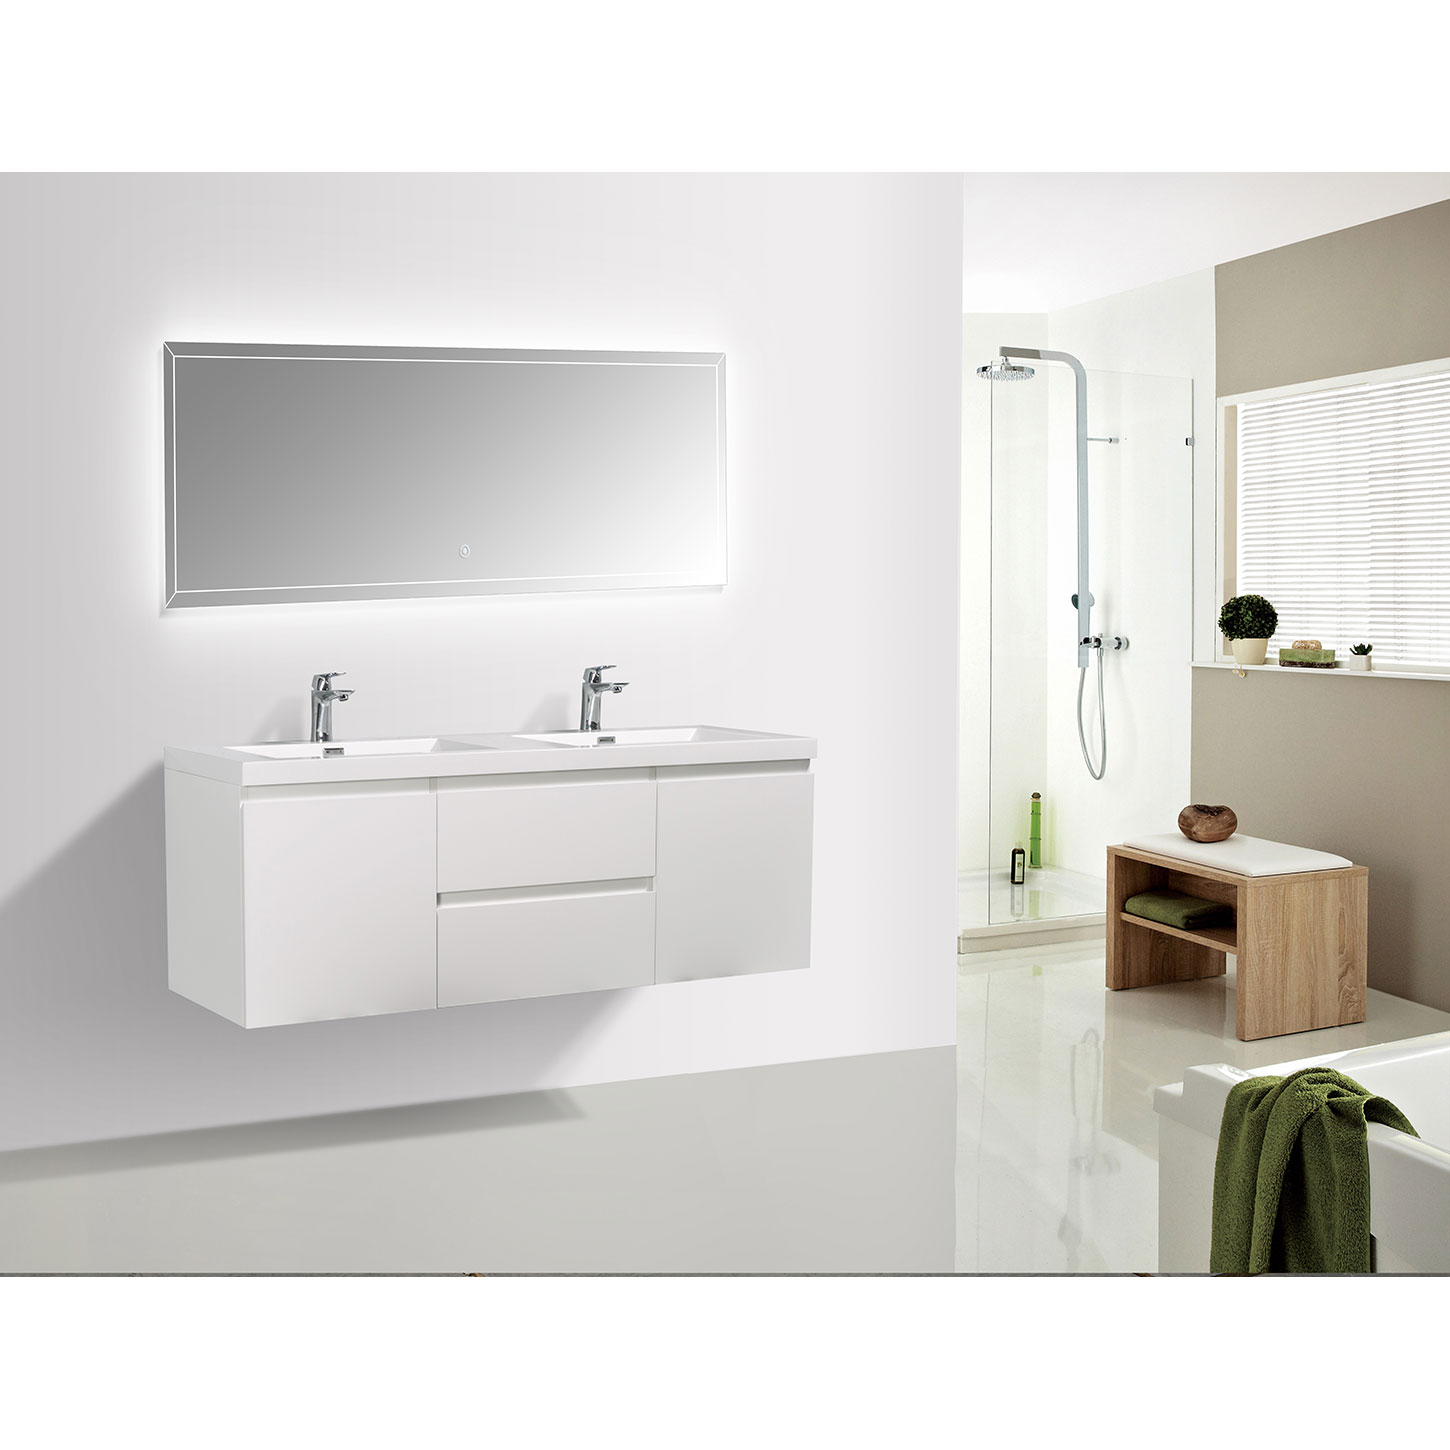 Bathroom Counter Organizer, Bathroom Organizer Countertop,Counter Standing Rack, Size: Style1, White